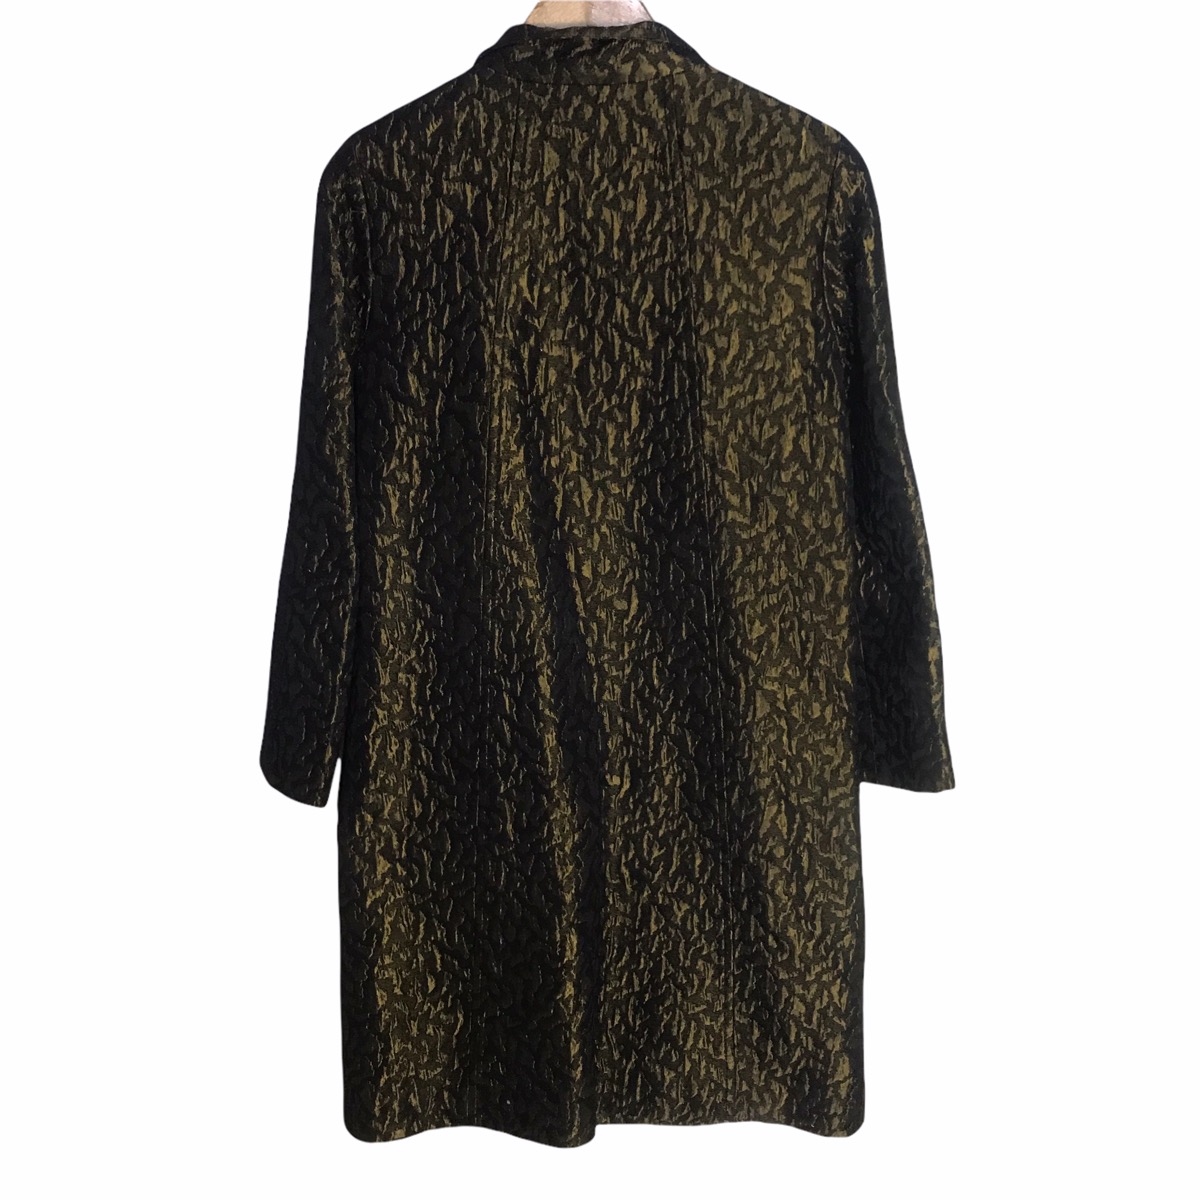 Look by Marc jacobs leopard long jacket - 2